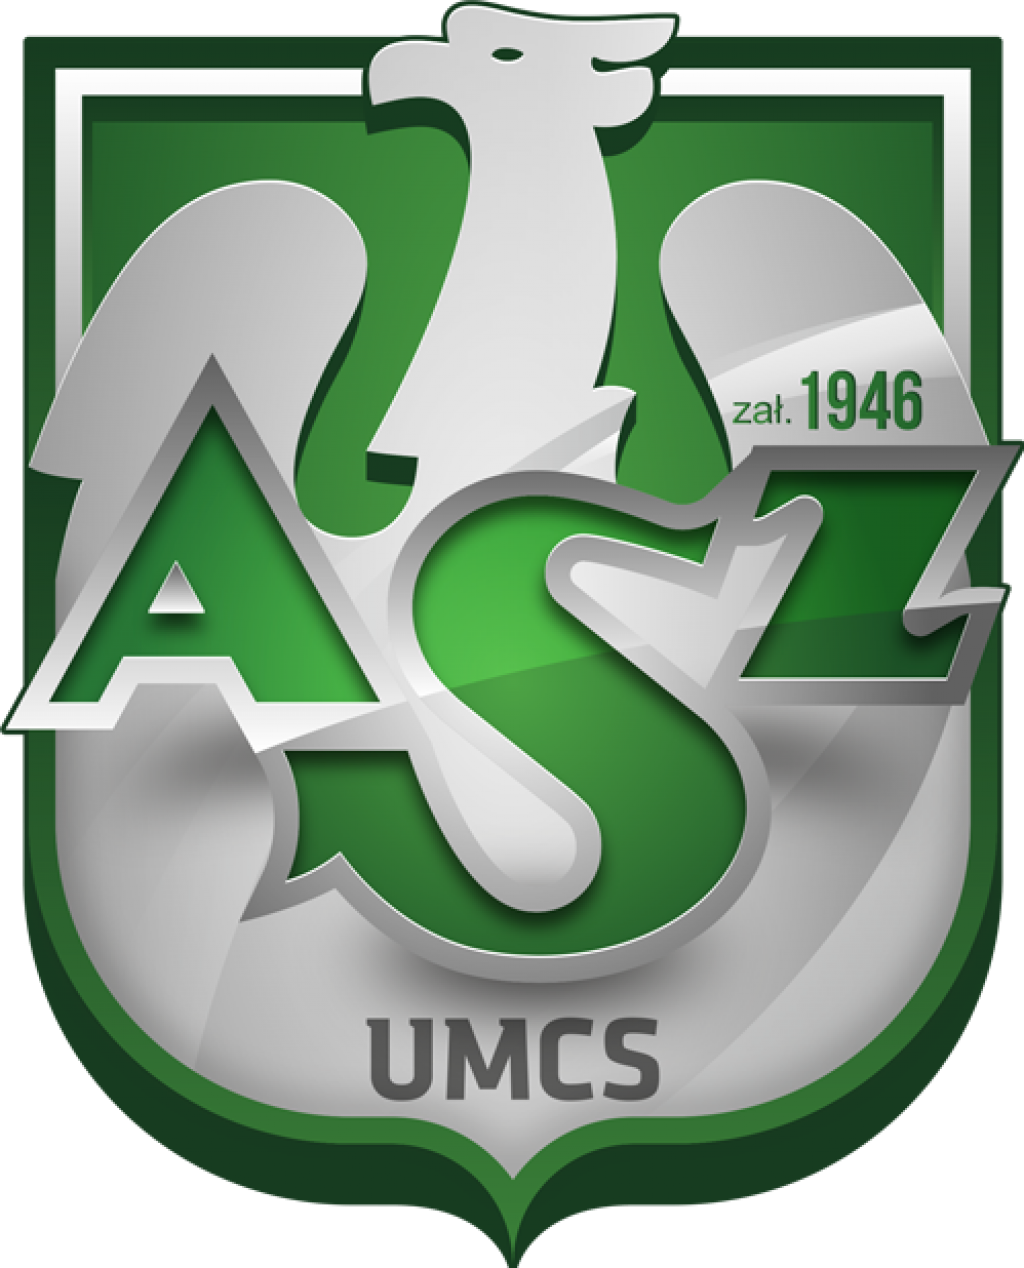 AZS UMCS Lublin - Sparta Warszawa 0:3, lider zbyt mocny